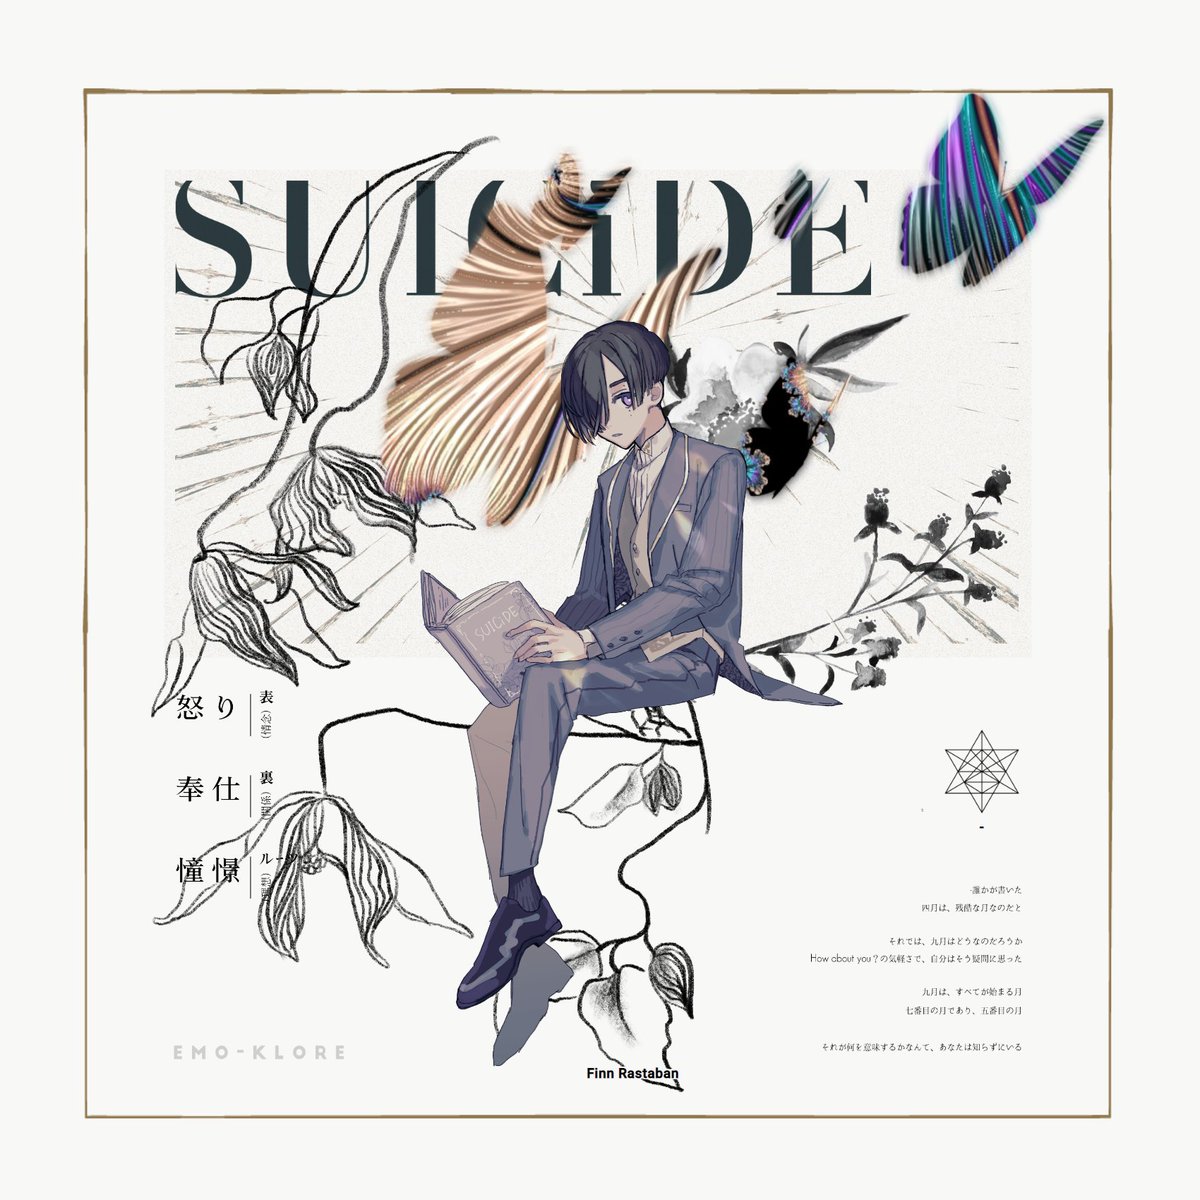 emo-klore  DLless
『 SUlCiDE 』

PC┊Finn Rastaban

END - A 